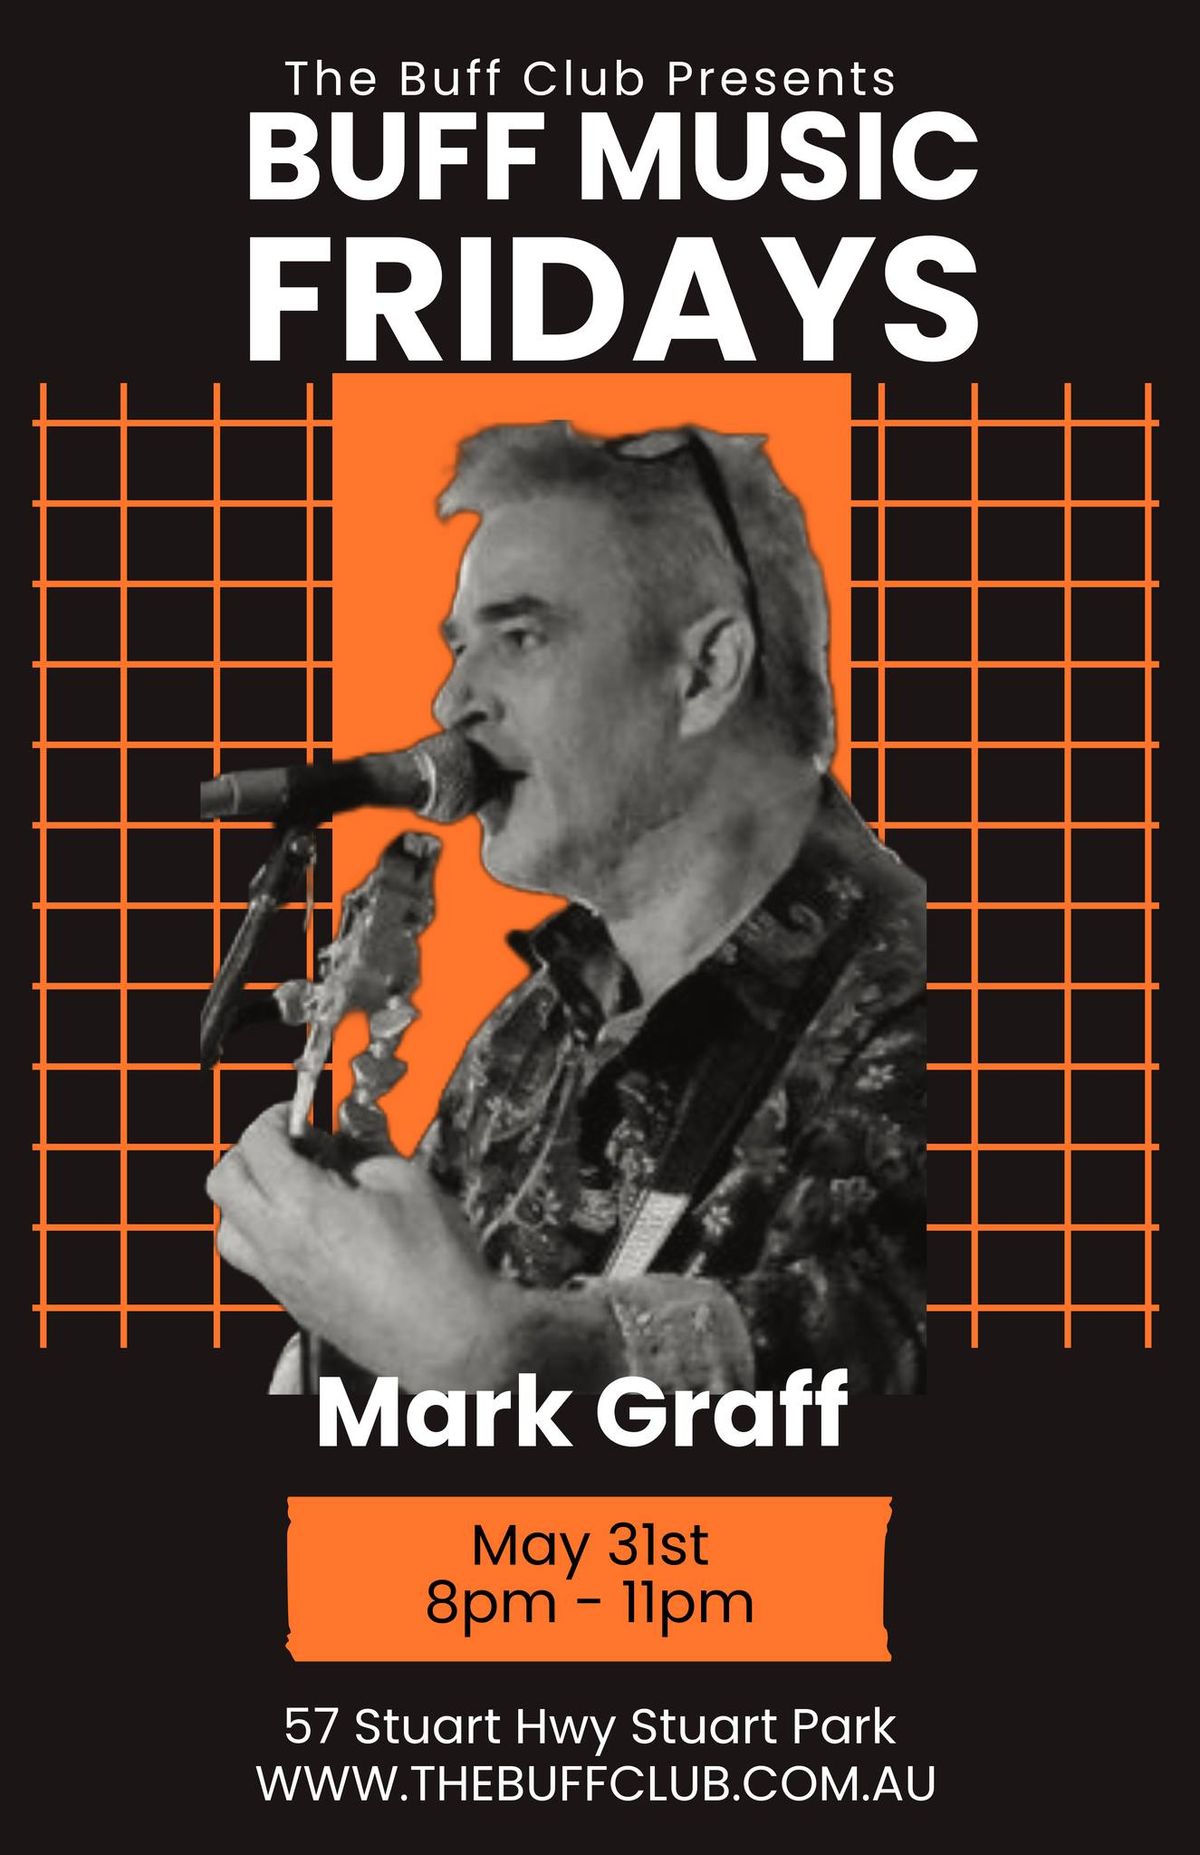 Buff Music Friday - Mark Graff